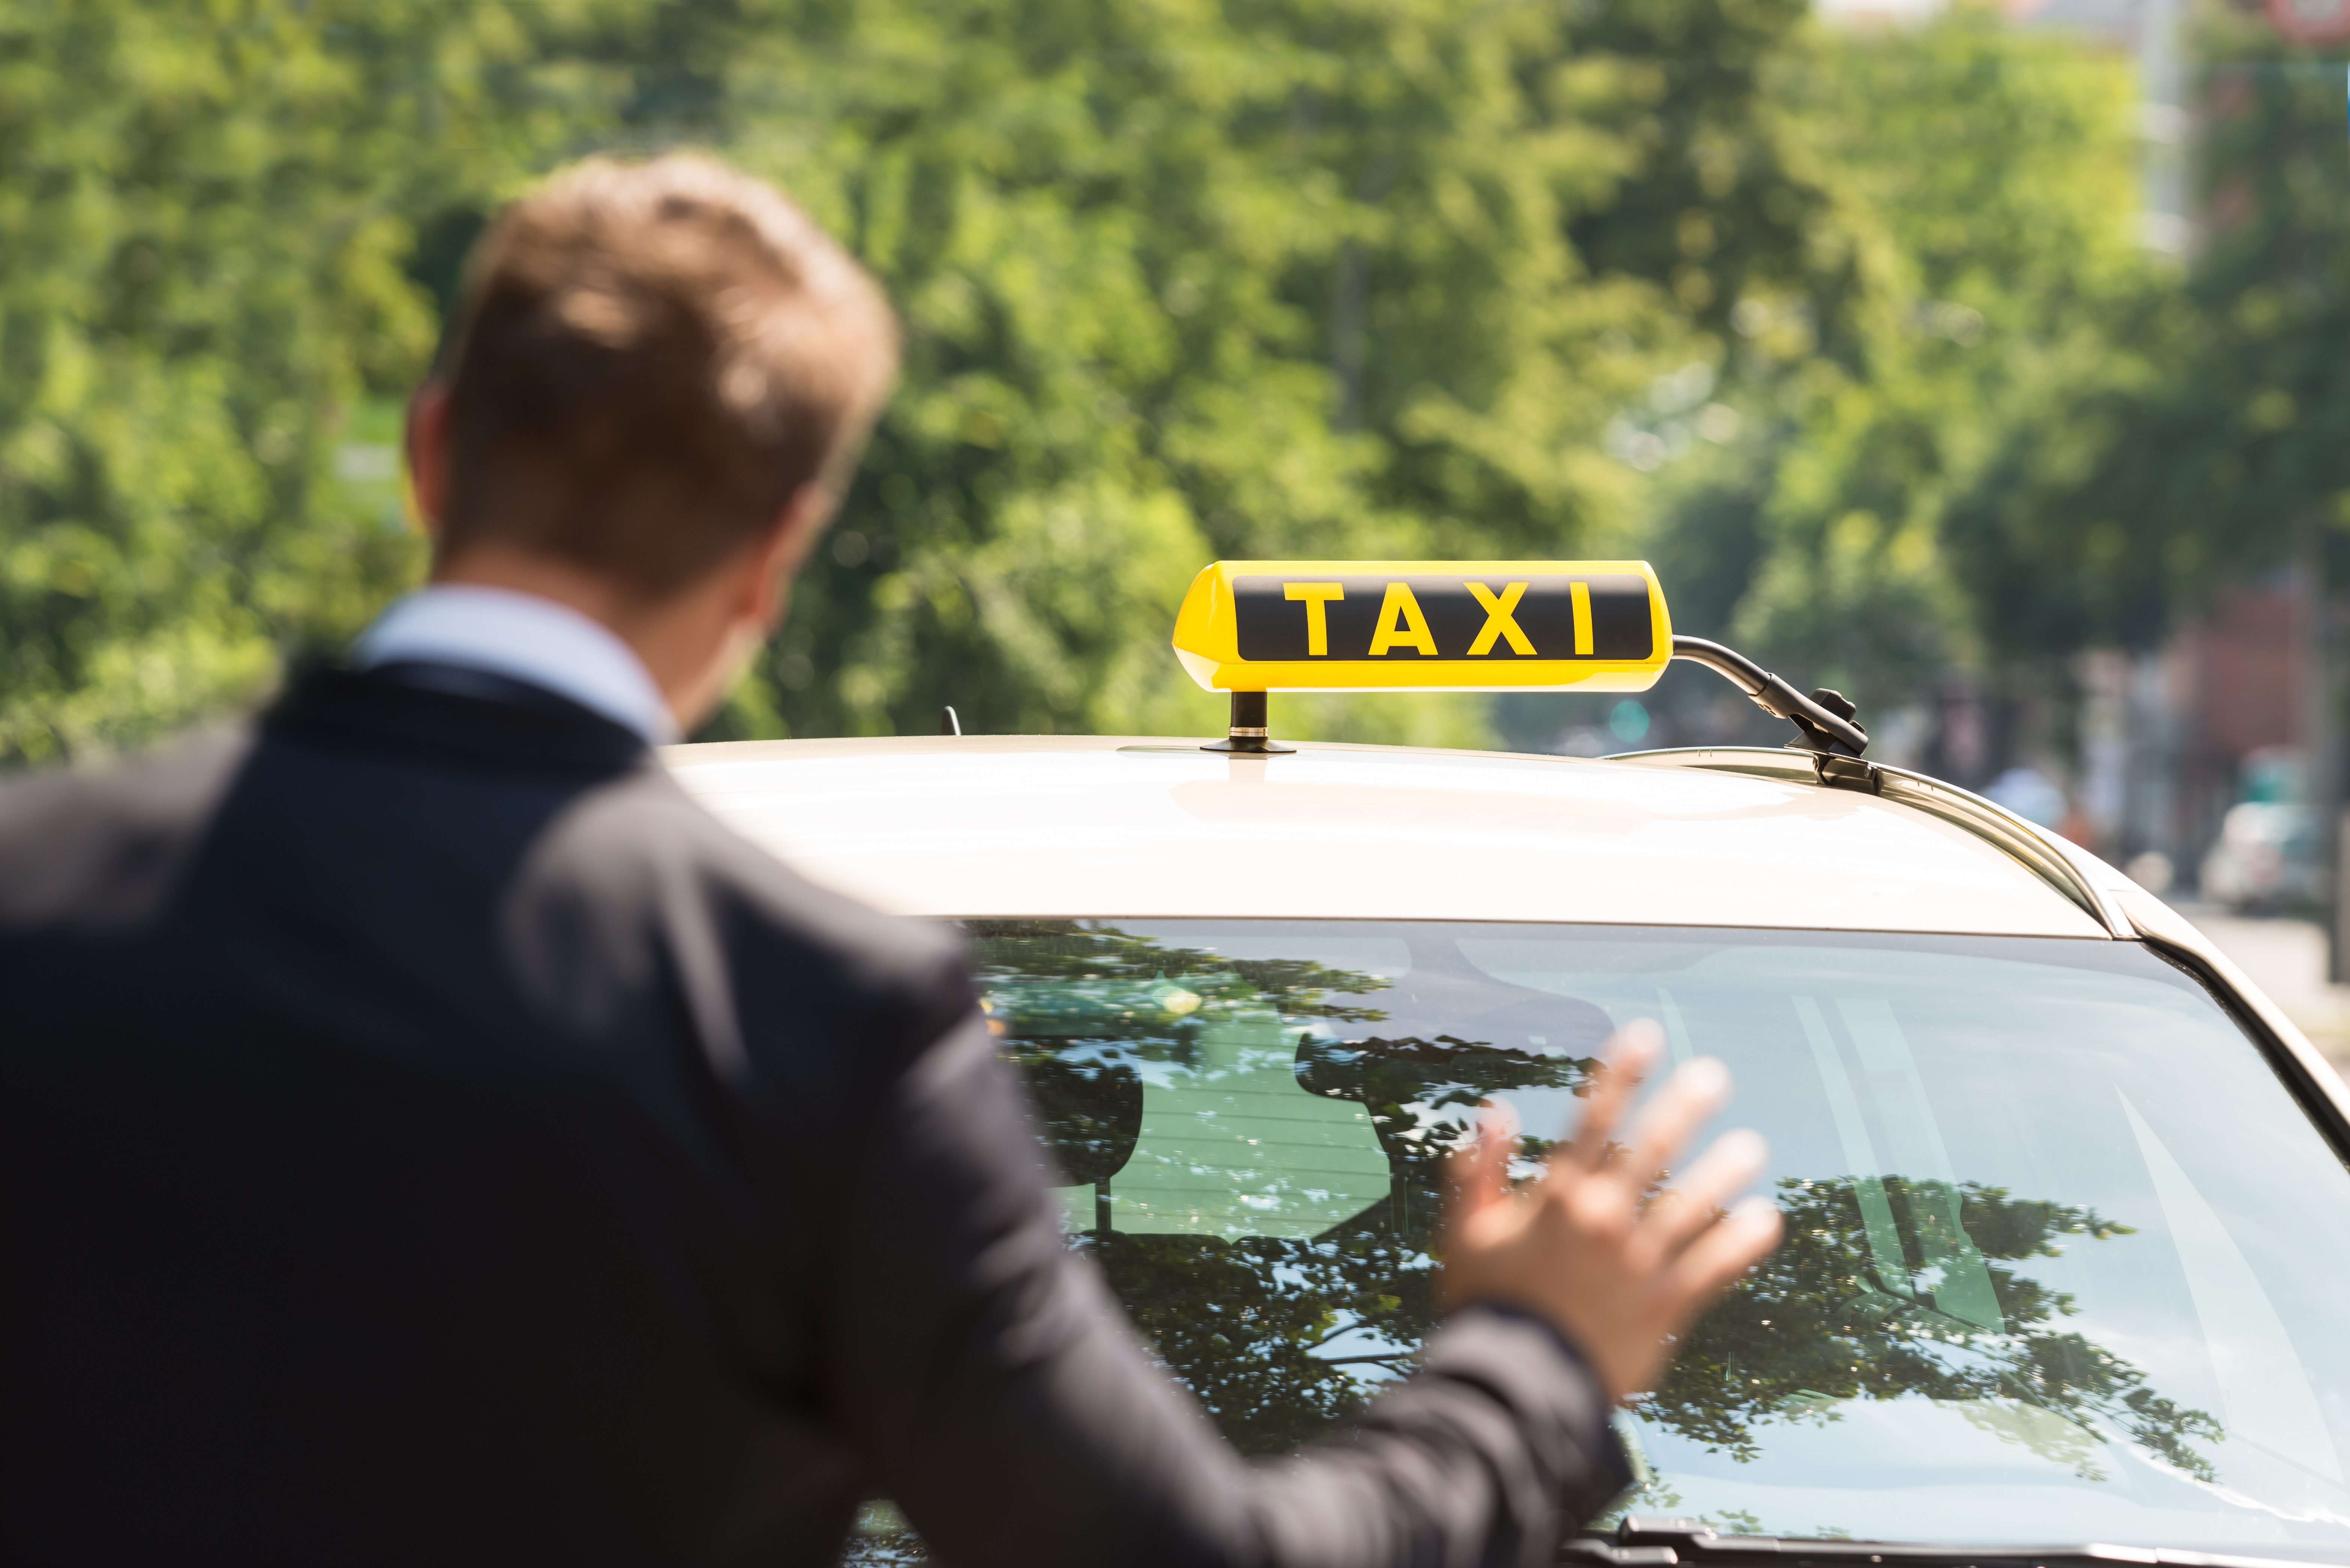 Taxi | Source: Shutterstock